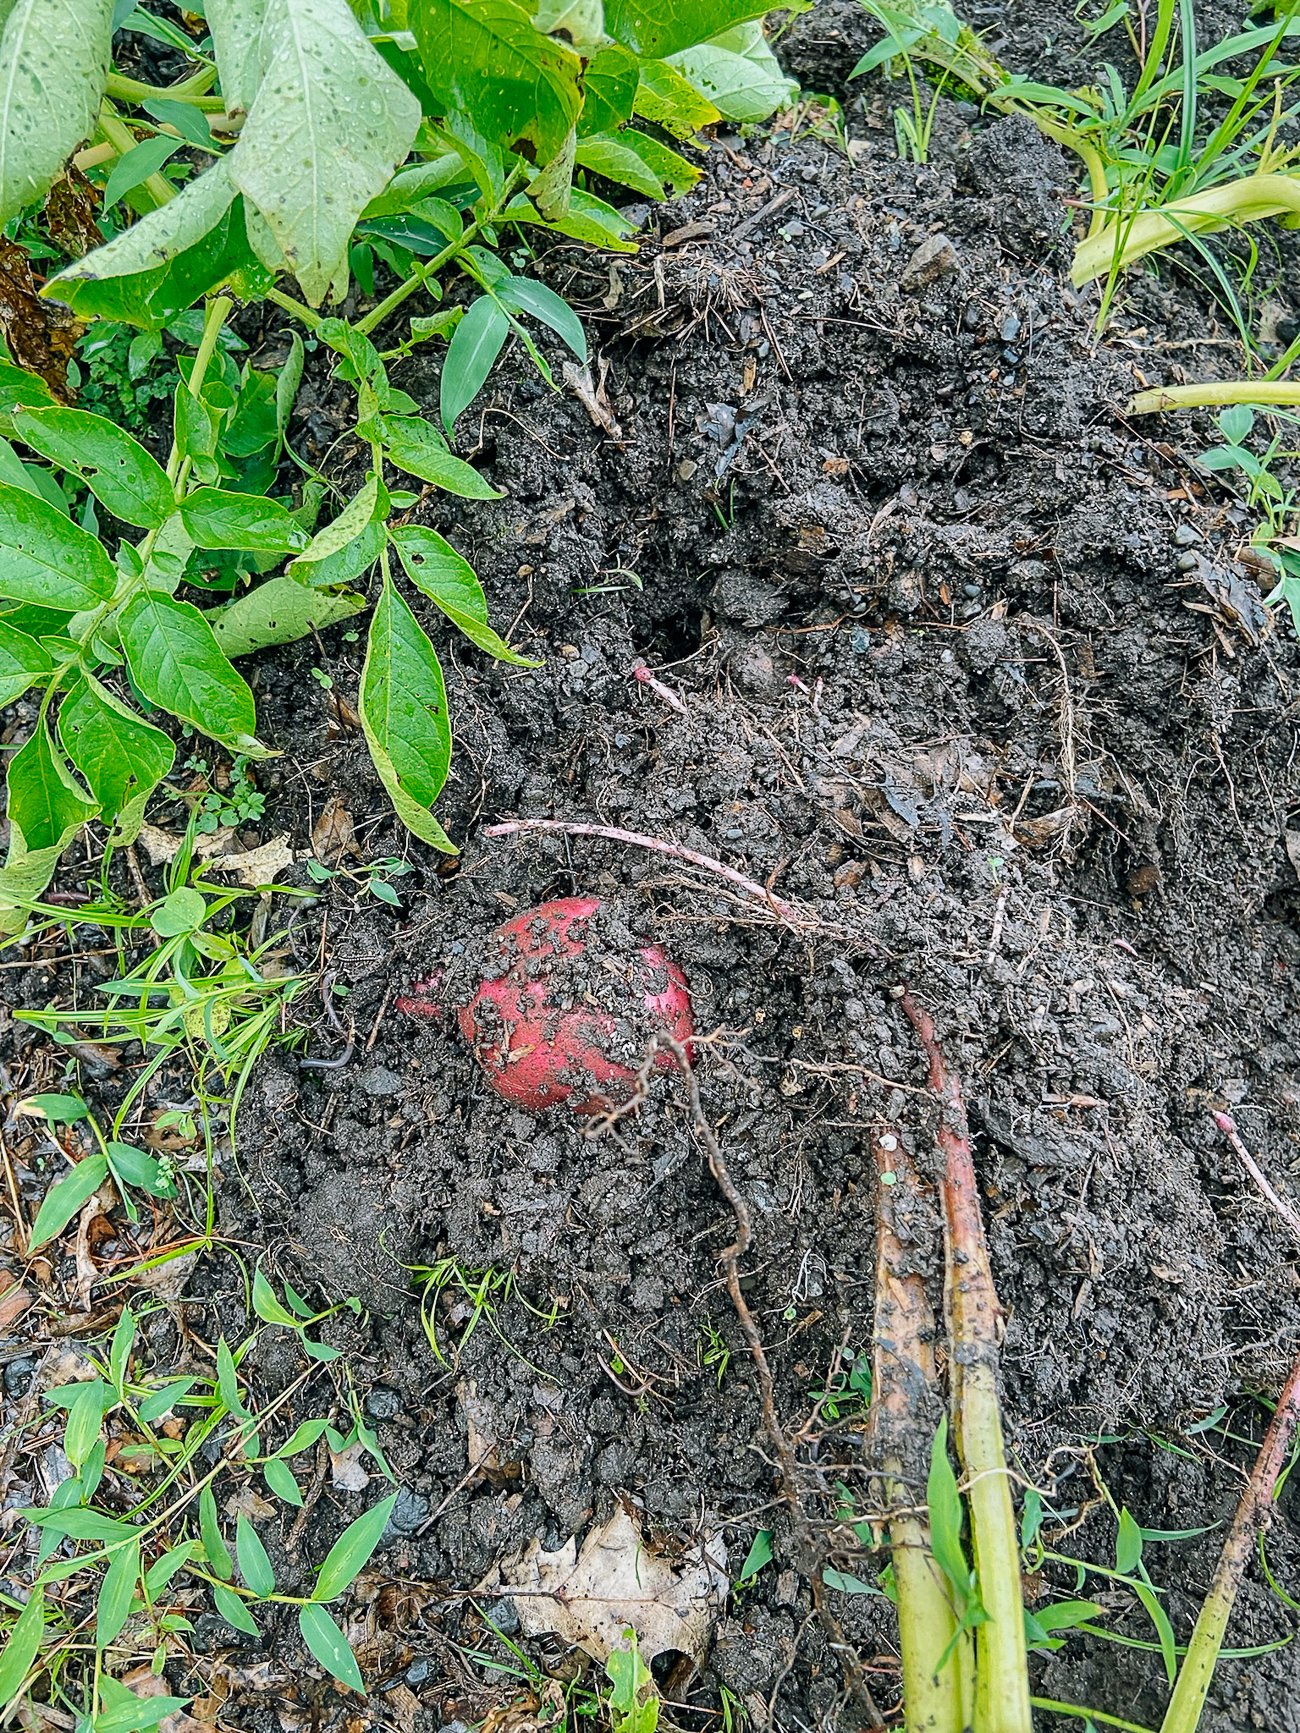 digging up red potatoes in dirt